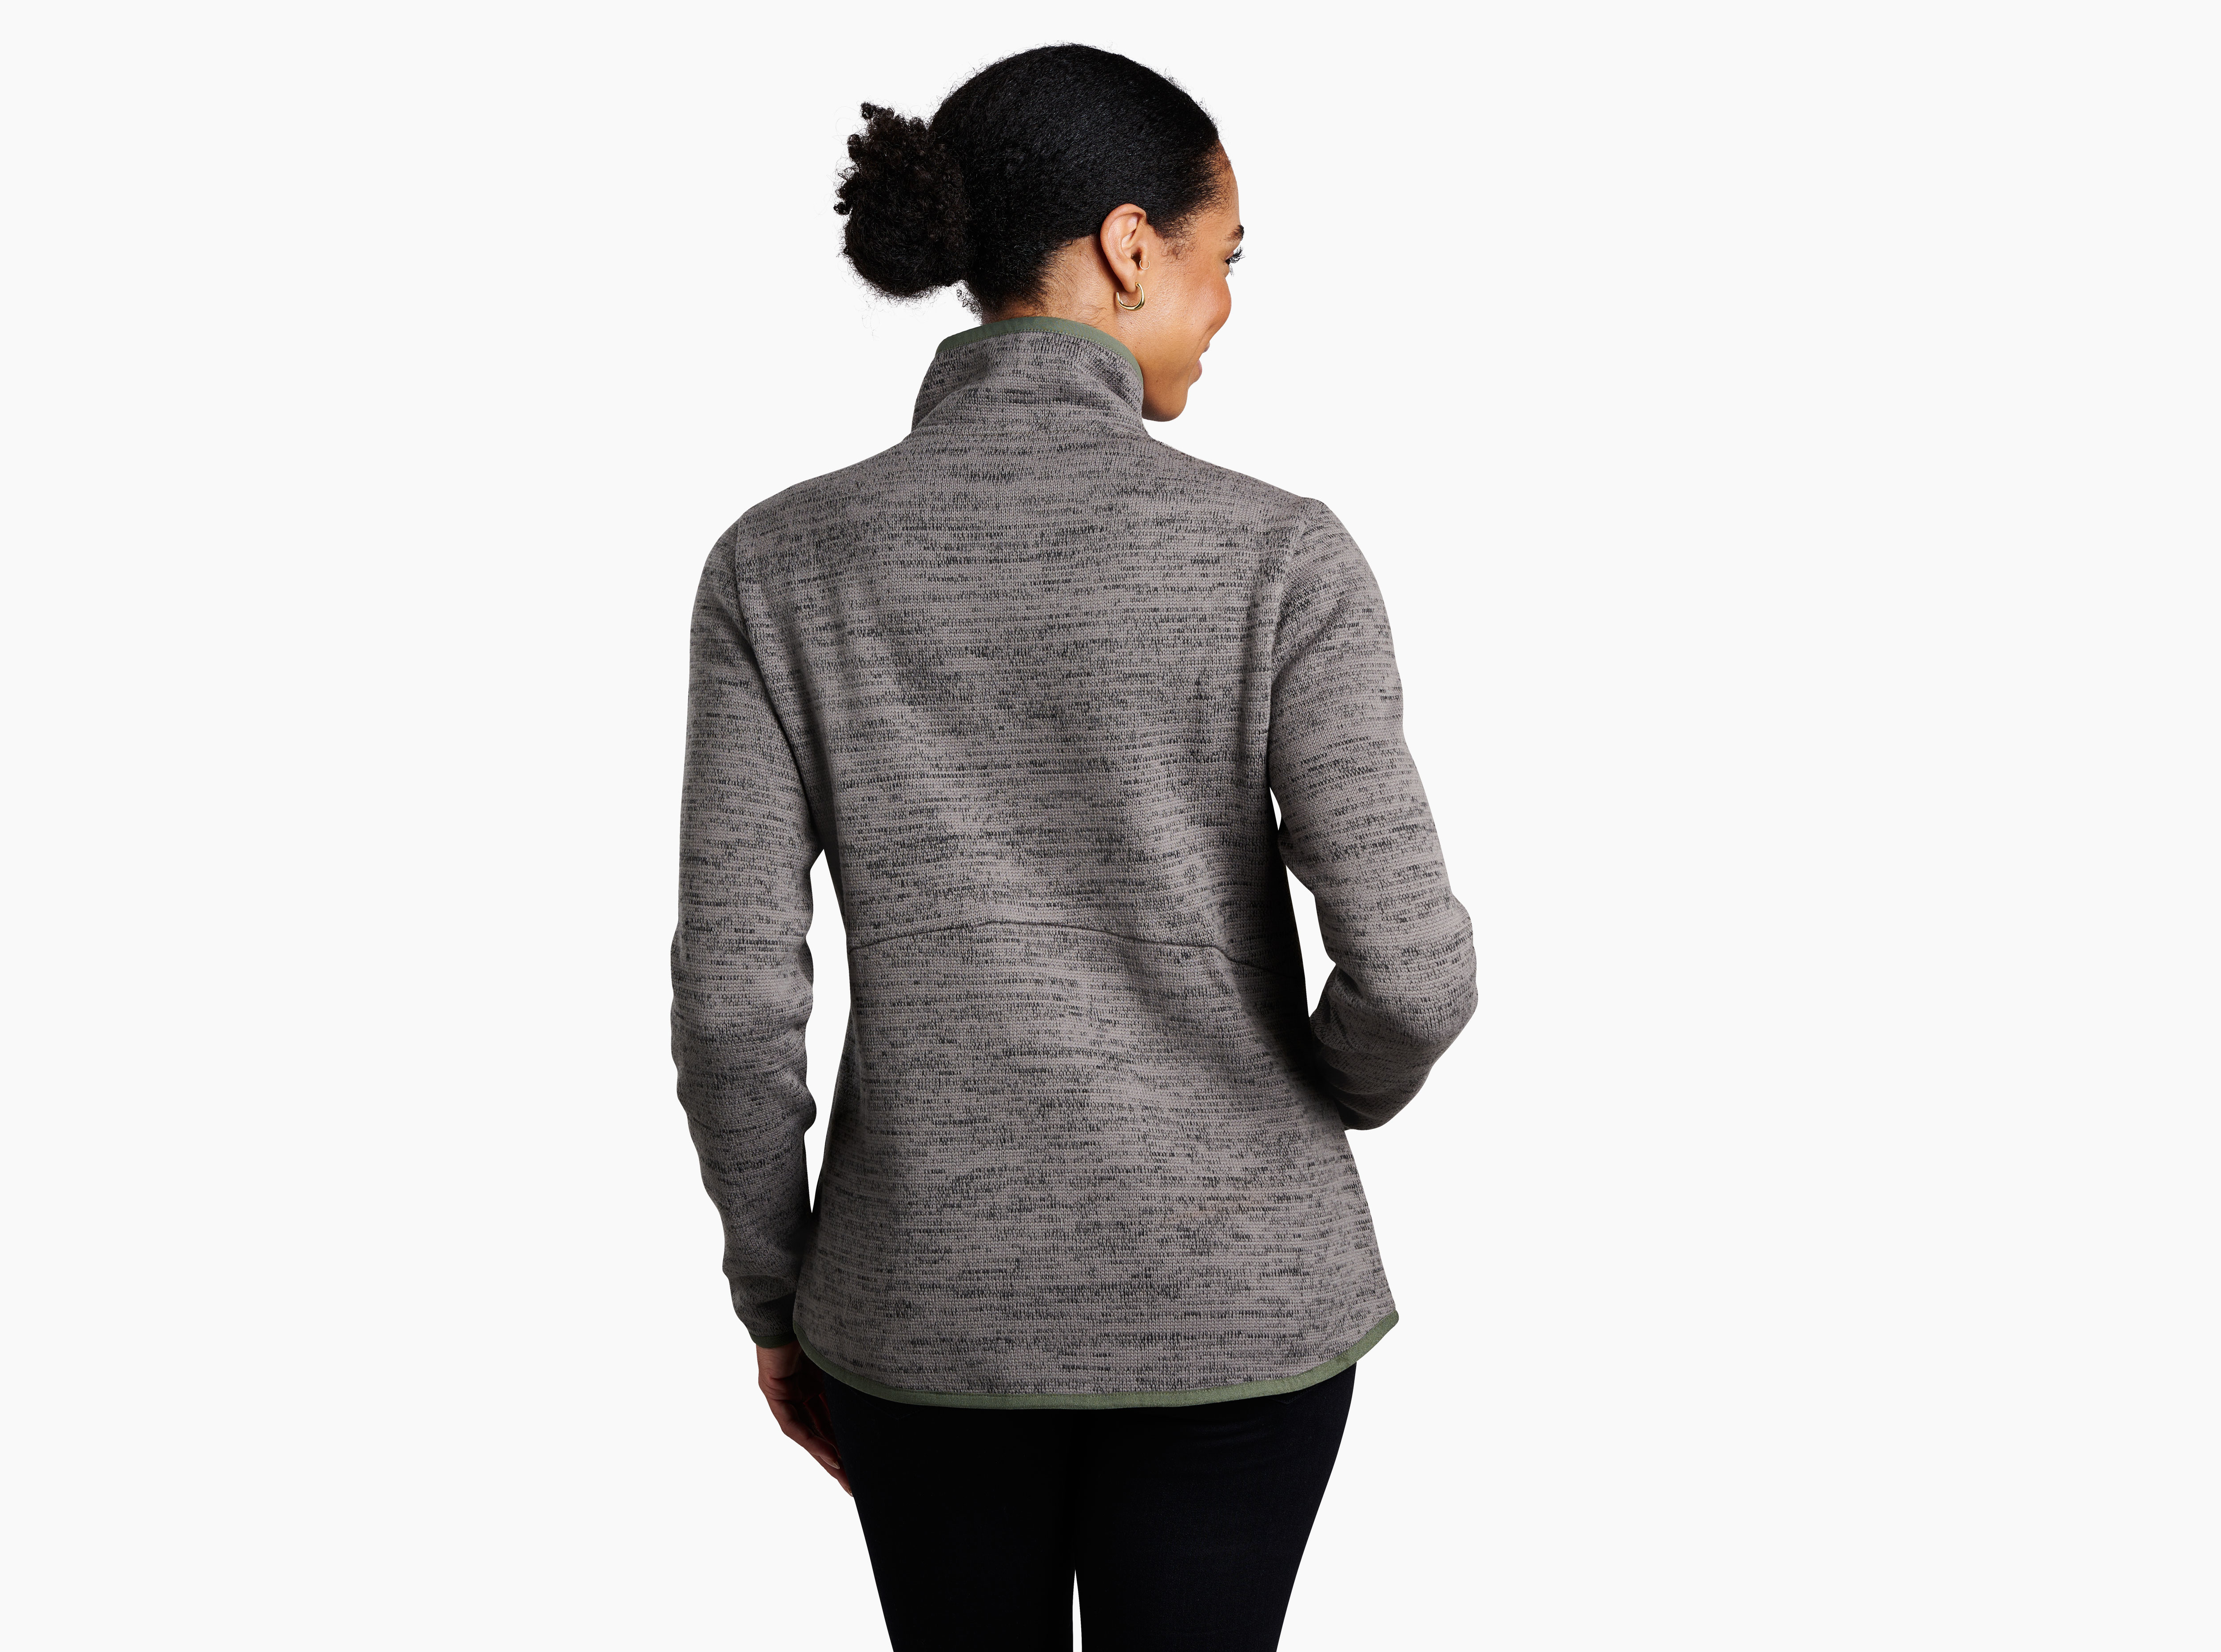 Kuhl Women's Ascendyr 1/2 Zip Fleece Sweater Jacket Black Size: M